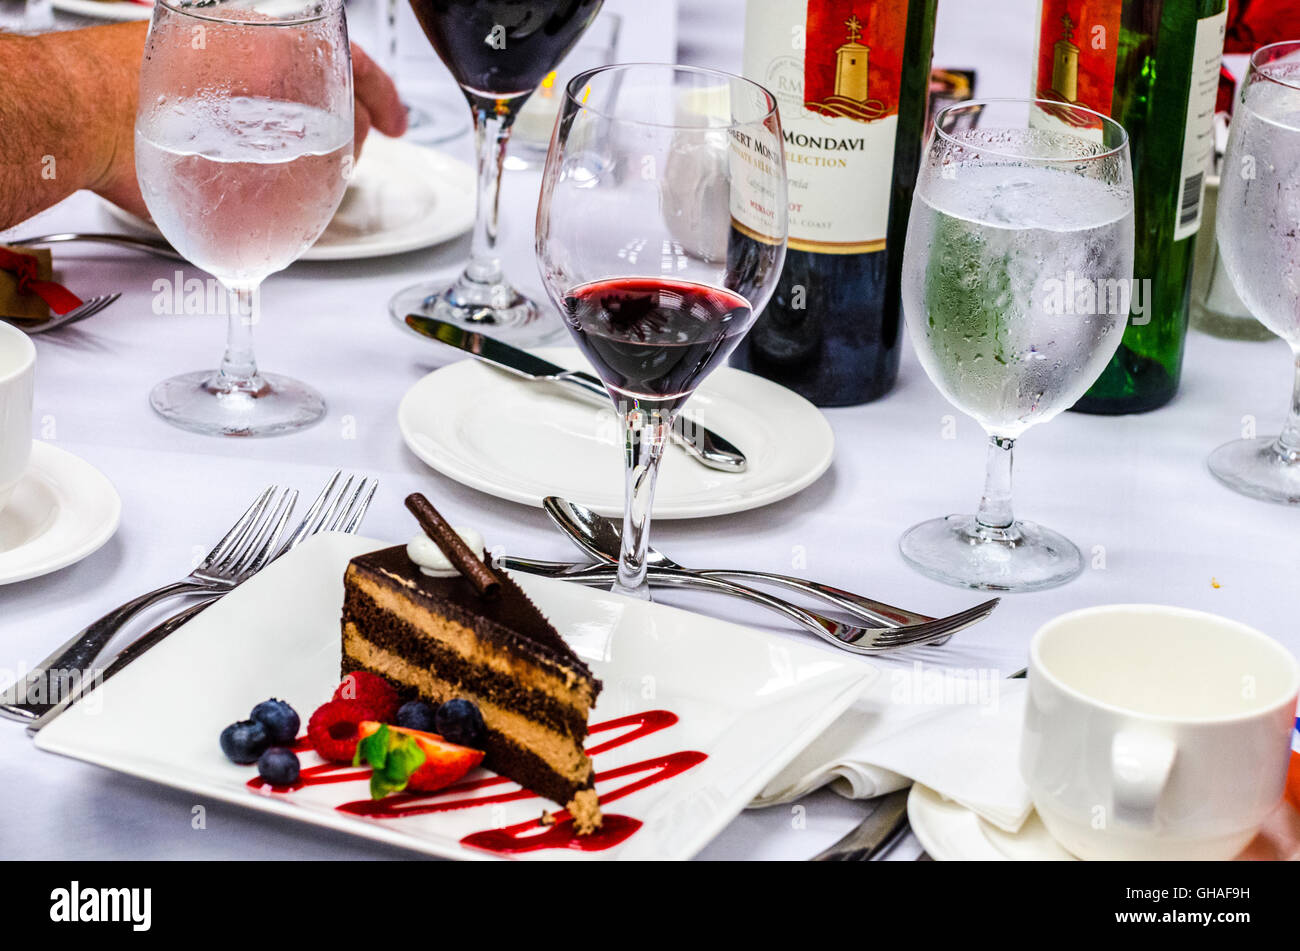 Un dessert torta su un elegante set table Foto Stock